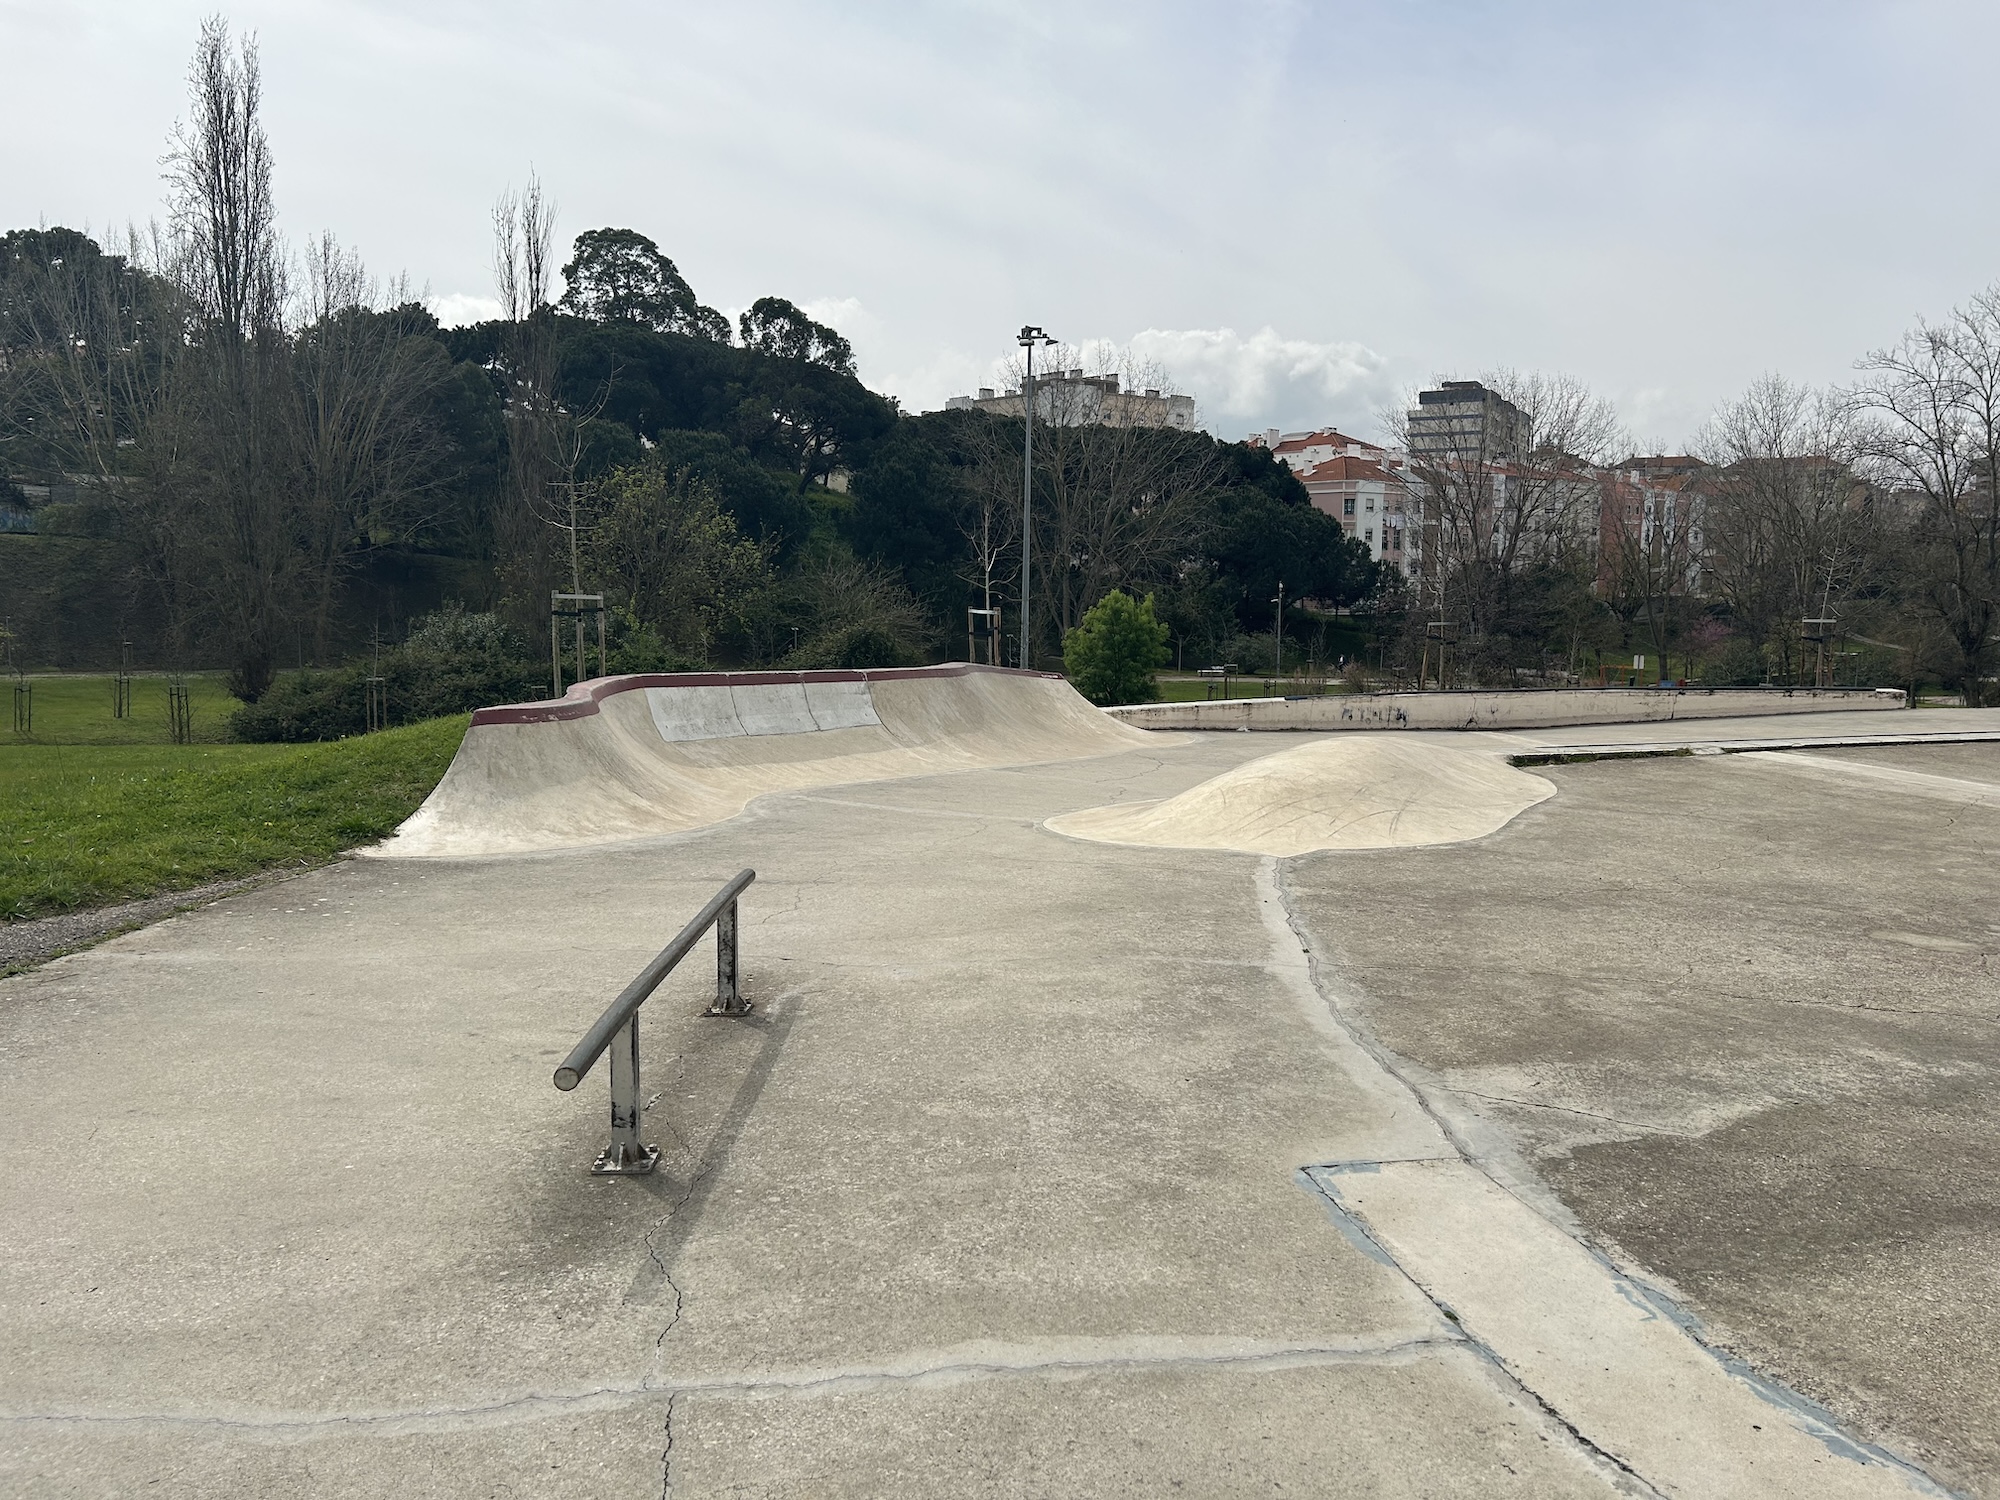 Boobie Trap skatepark